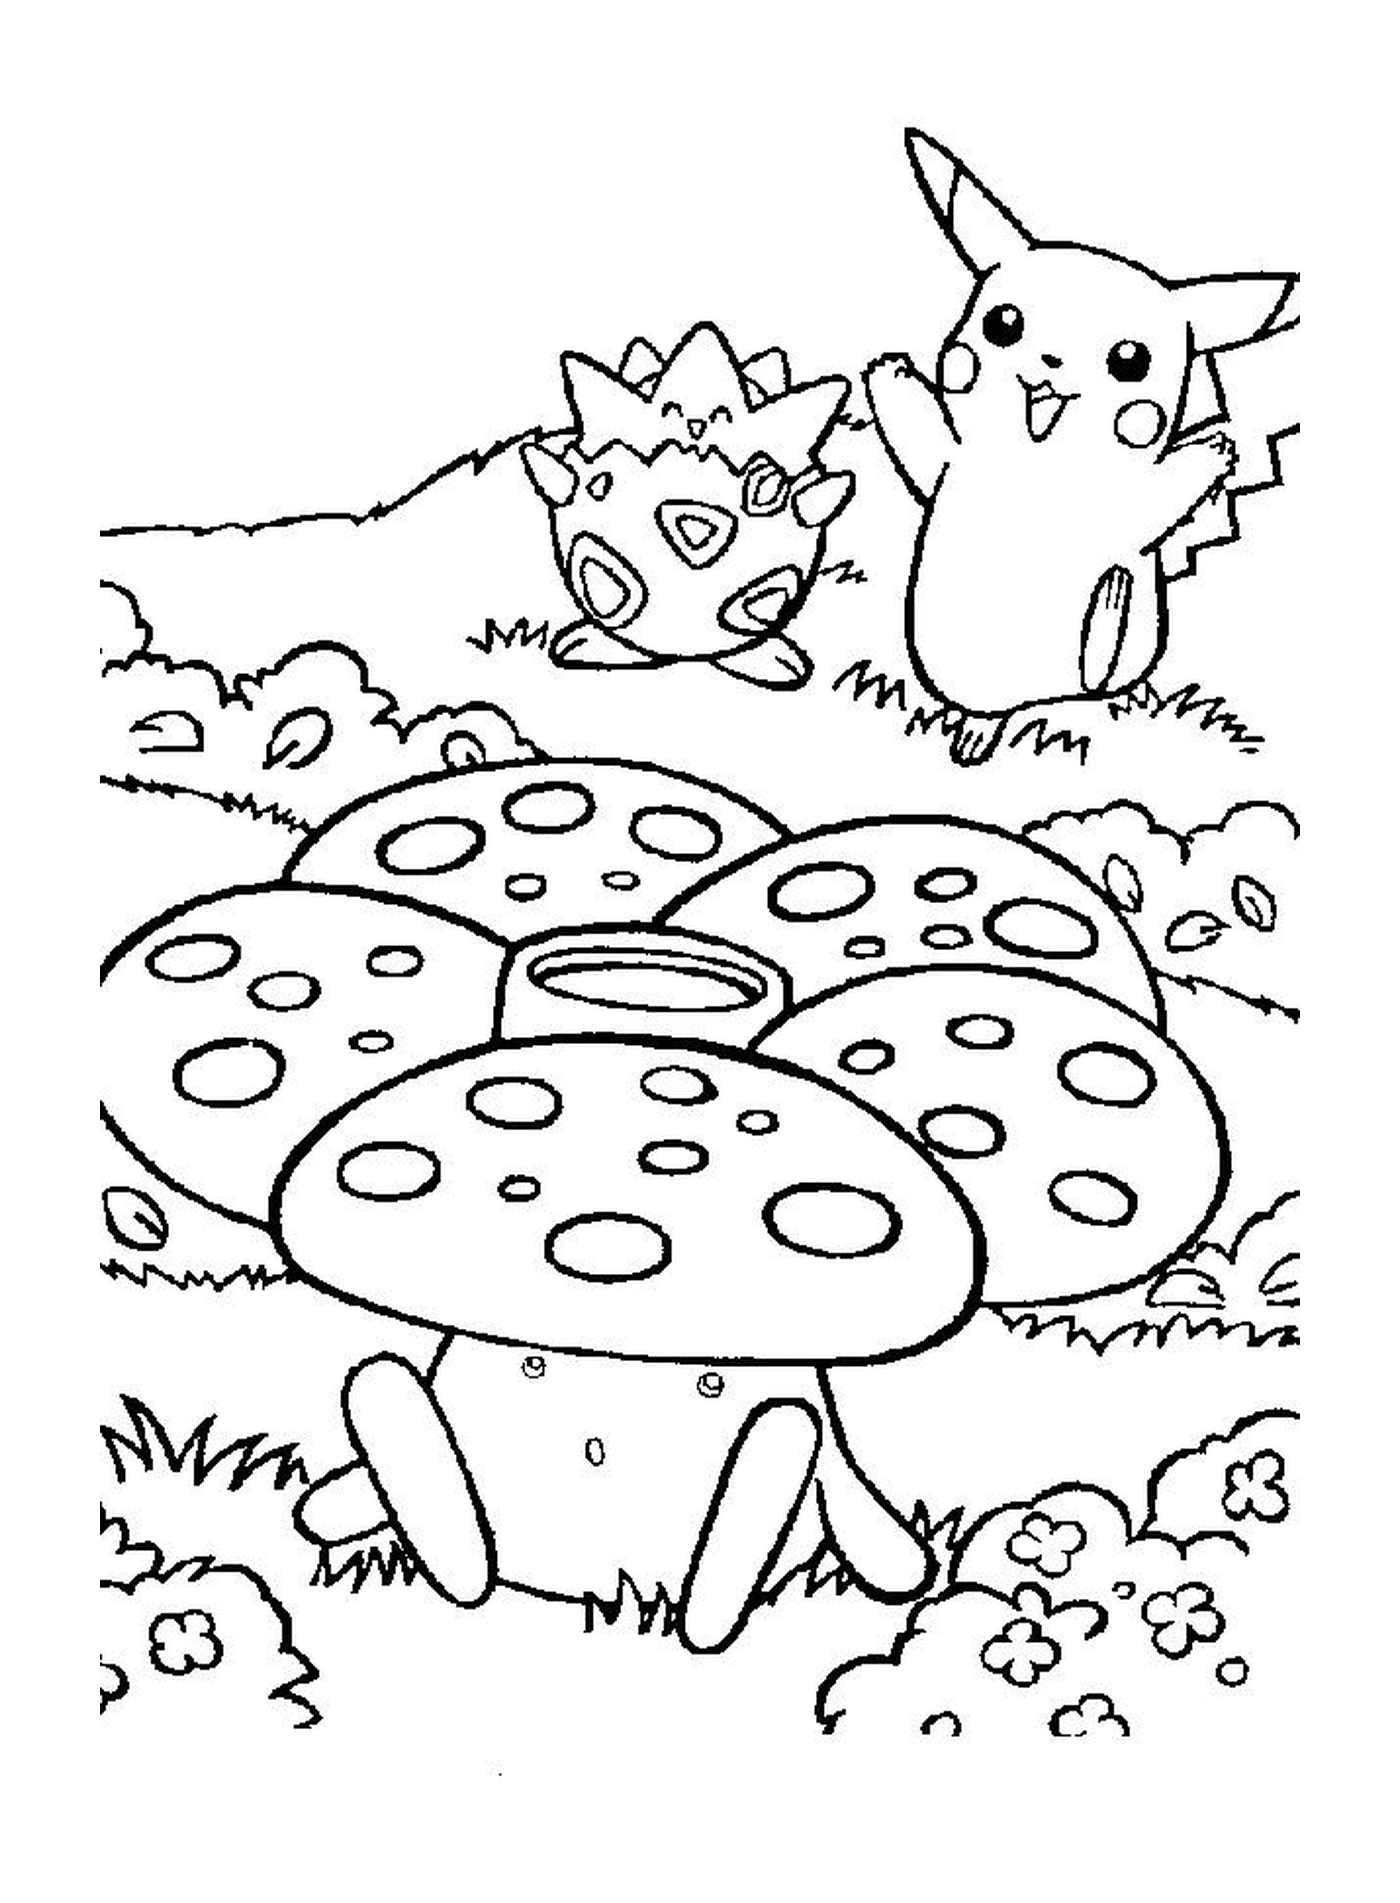  Pikachu with a fungus 